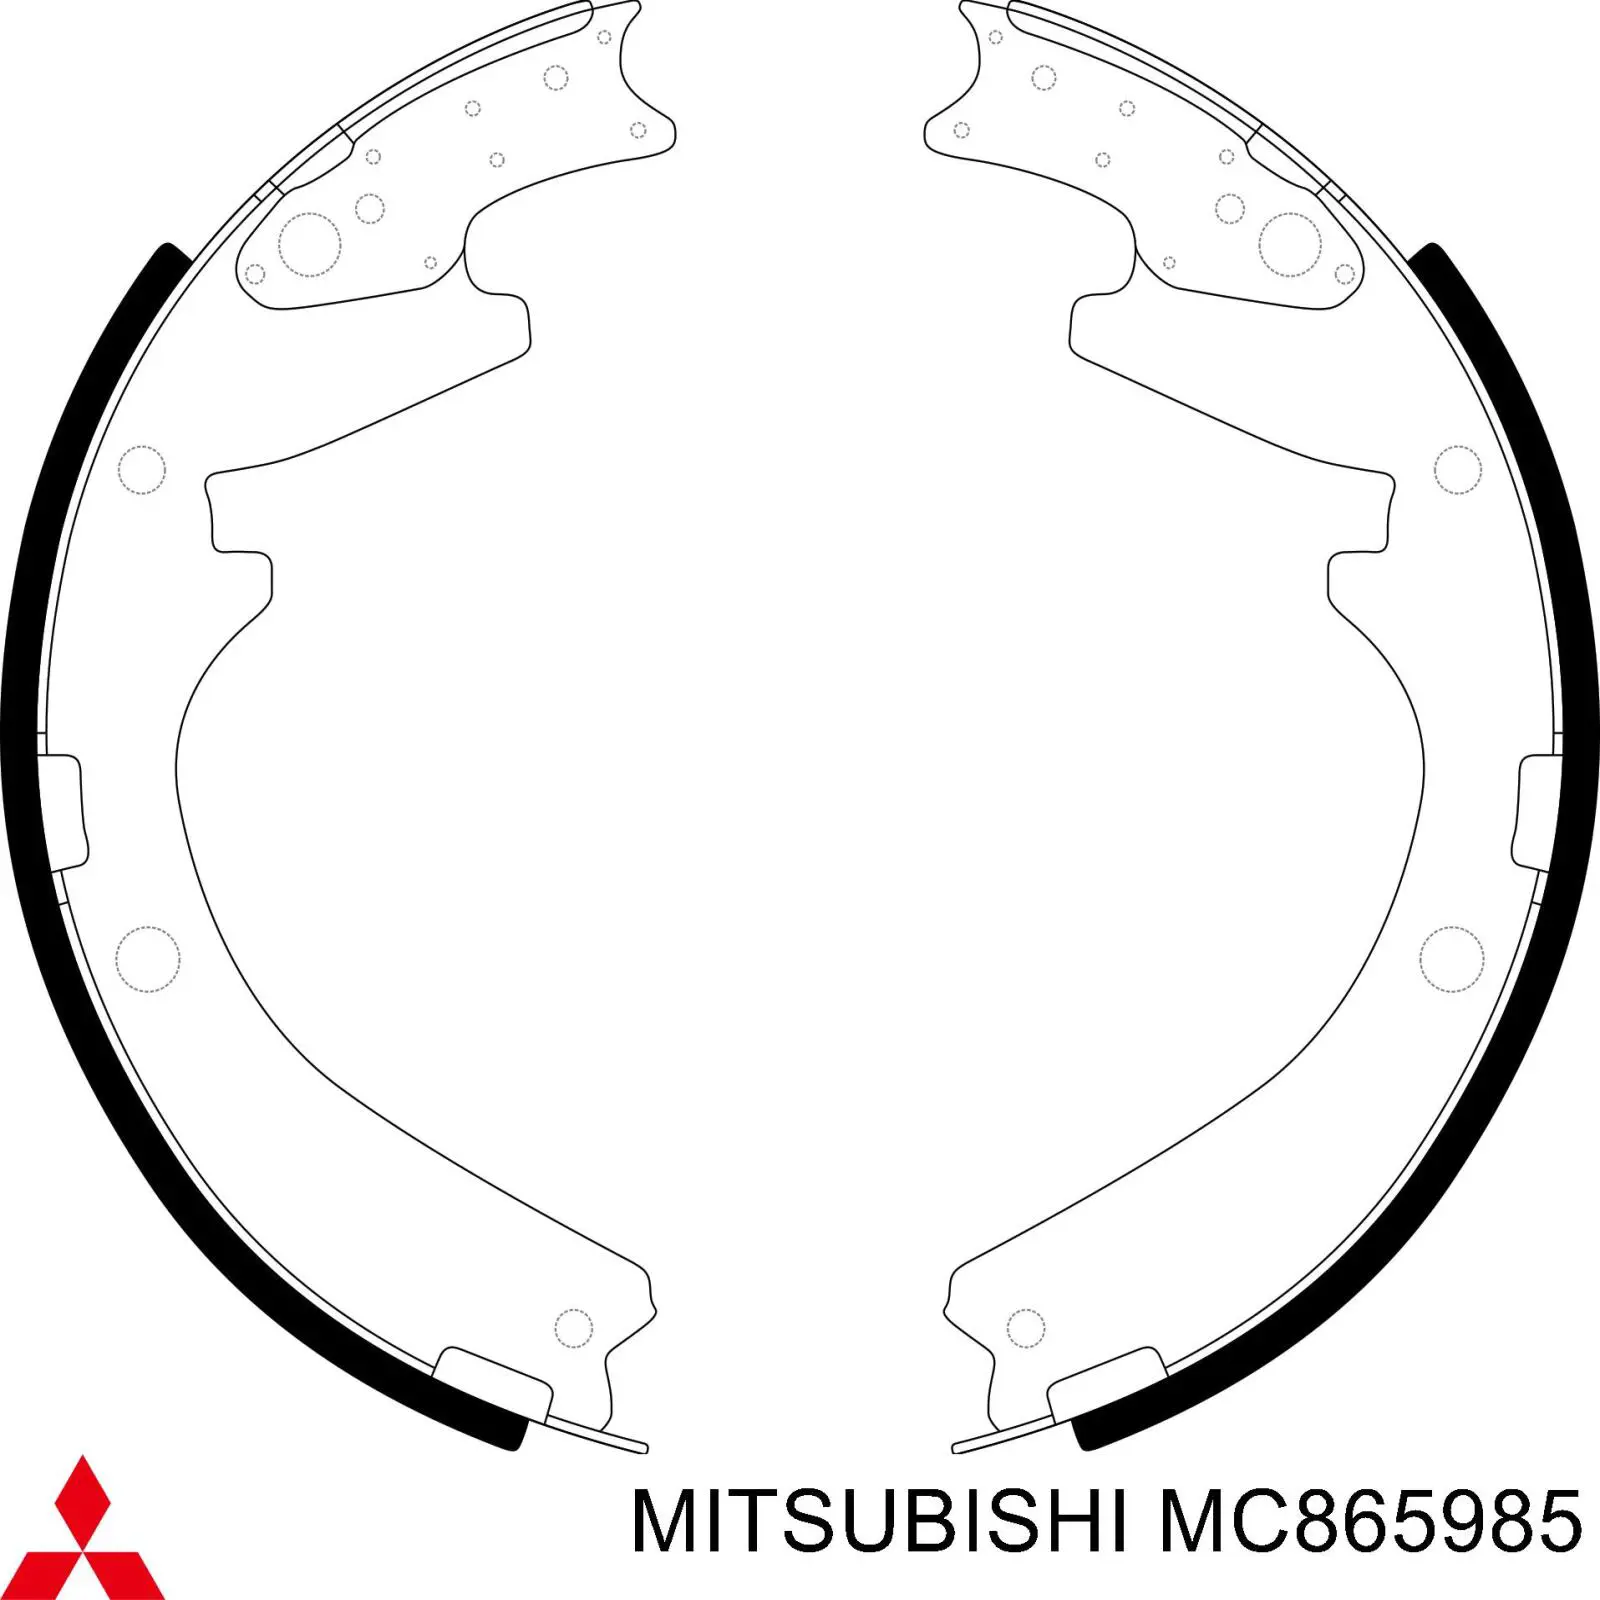 MC865985 Mitsubishi zapatas de frenos de tambor traseras